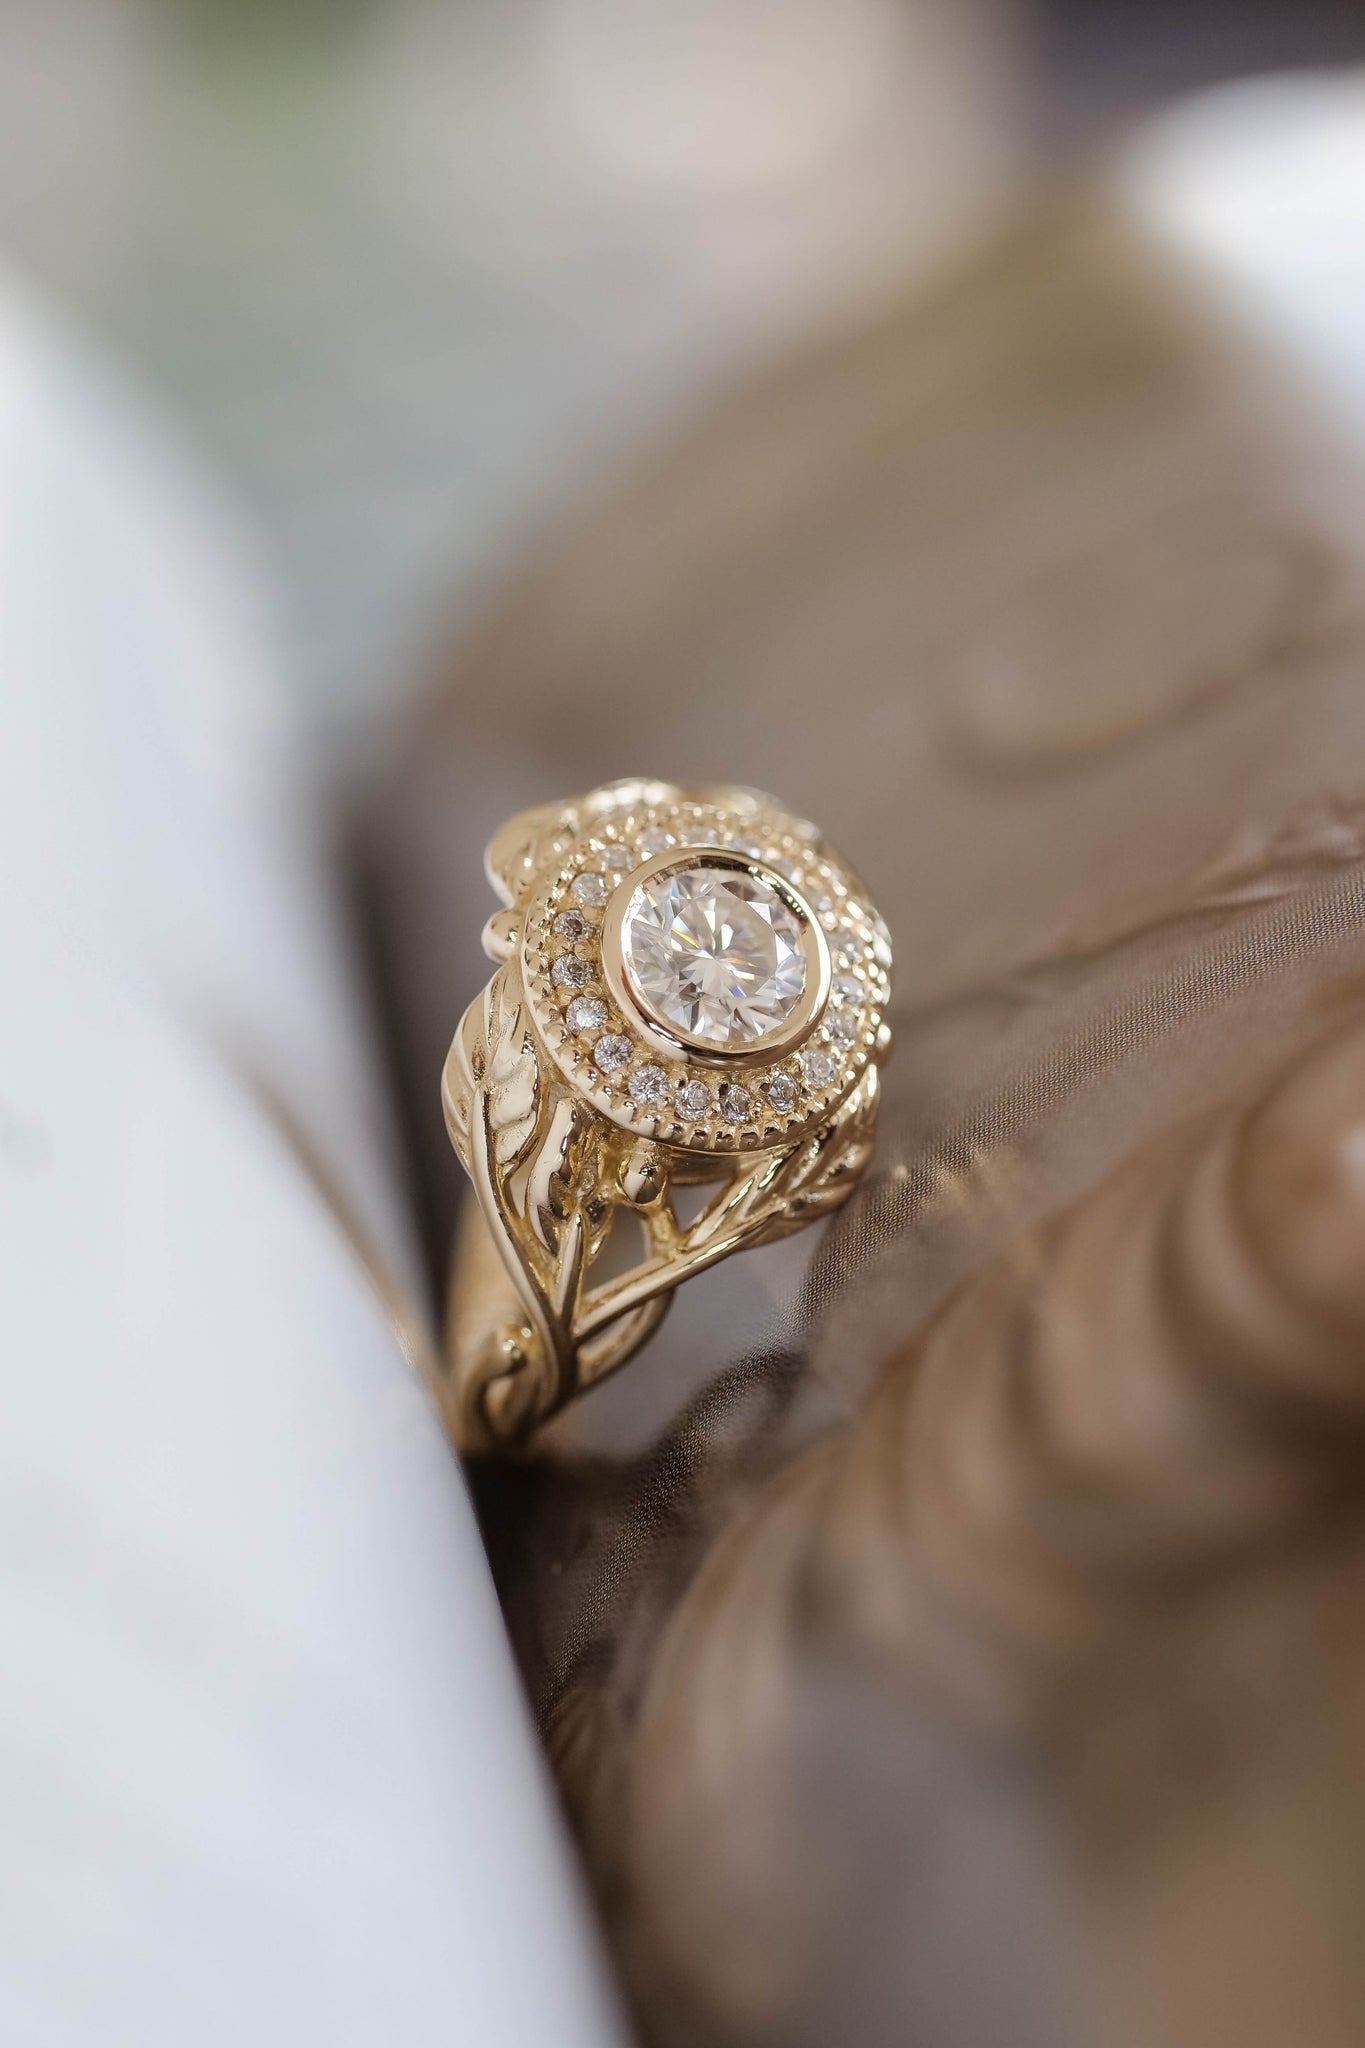 Leaf & halo engagement ring with moissanites / Tilia halo - Eden Garden Jewelry™